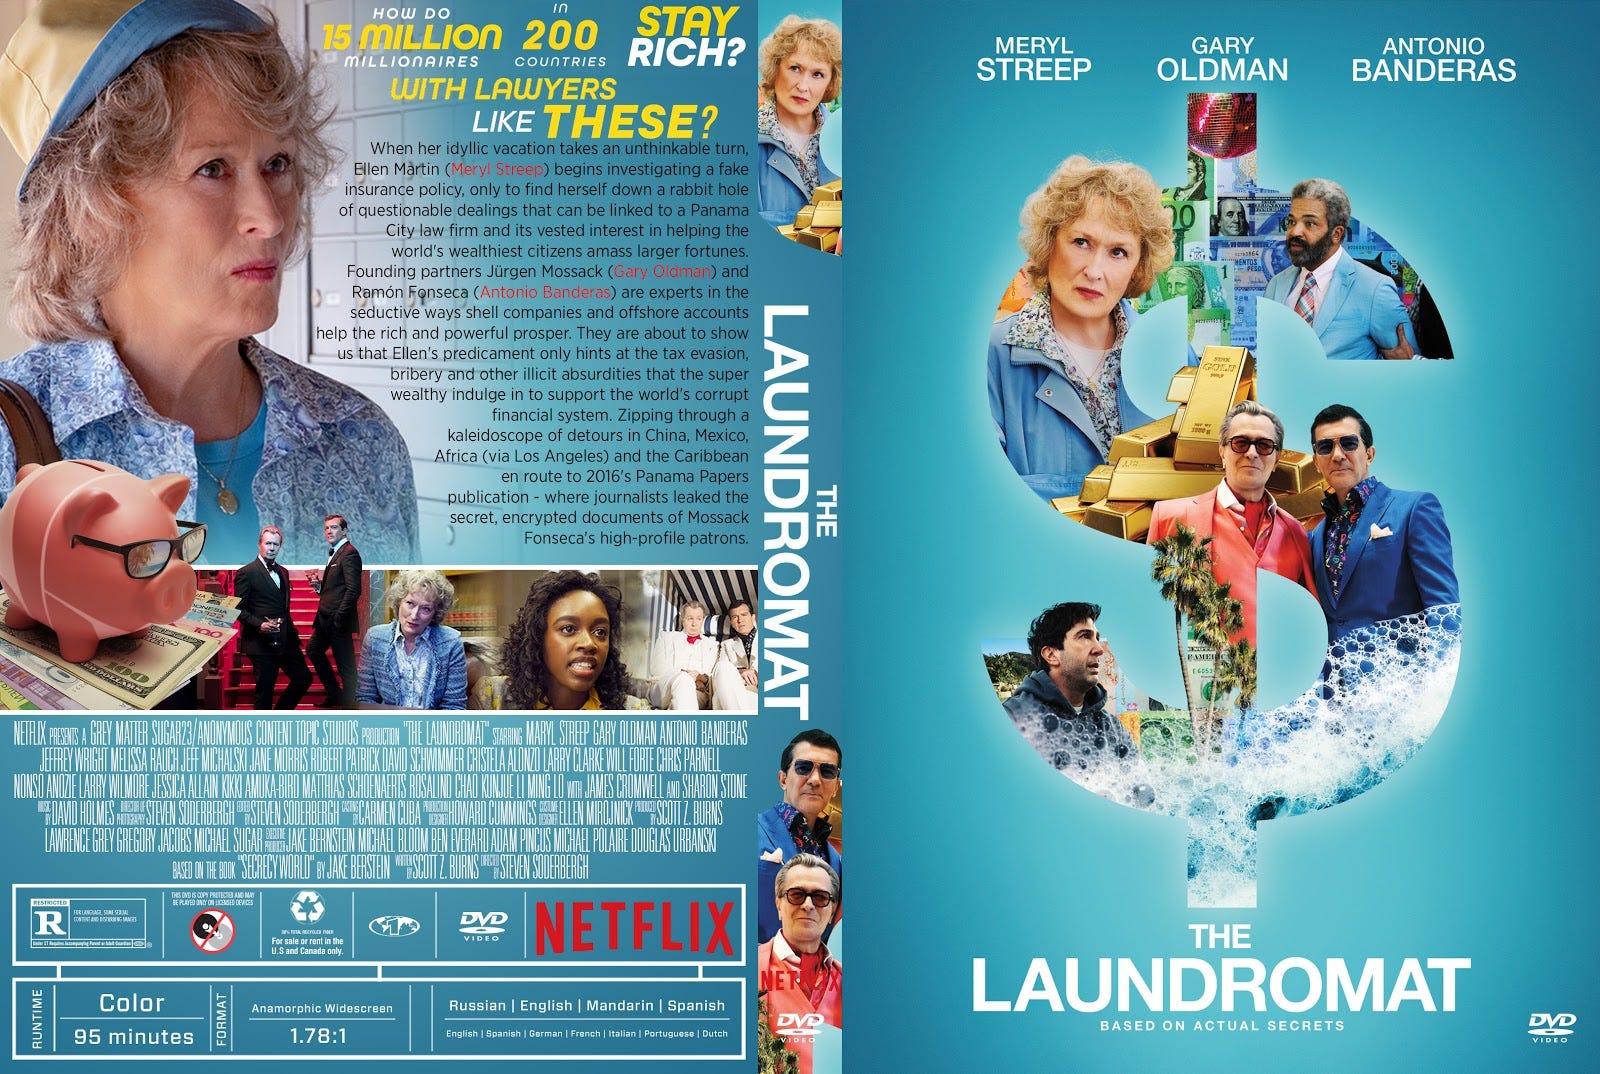 Watch Full Movies The Laundromat 2019 Ghfhgfhgfhgfhgfjgfj